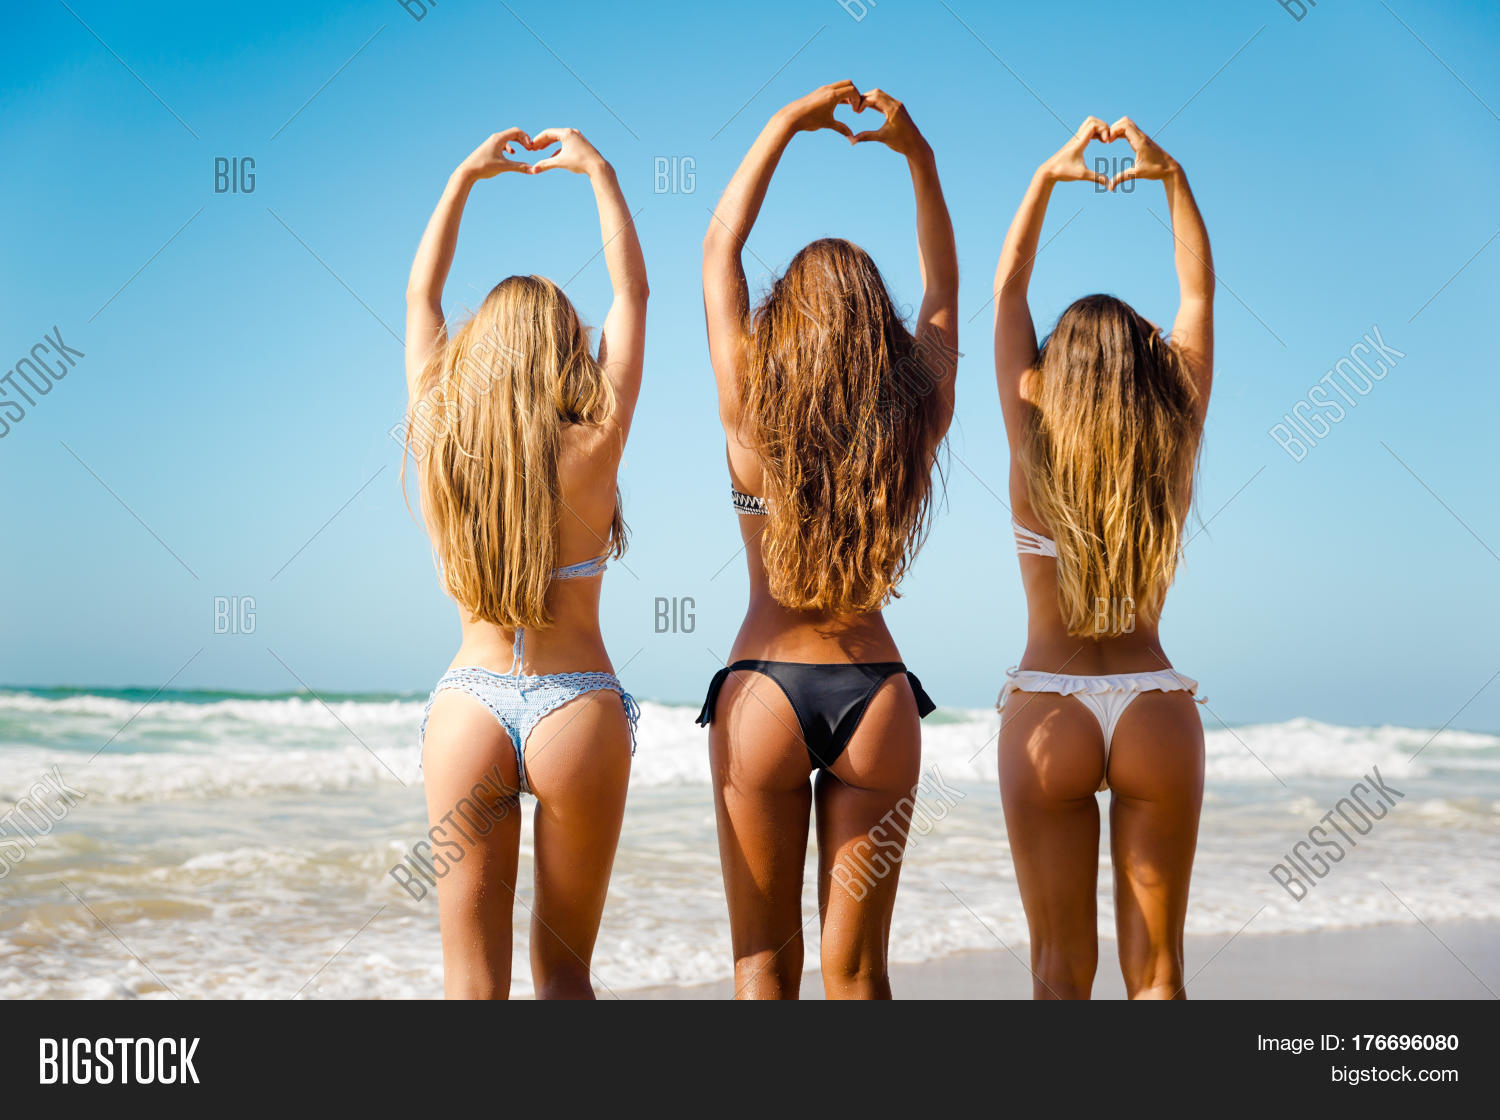 amaka ezeokoye recommends Girls On Beaches Pictures